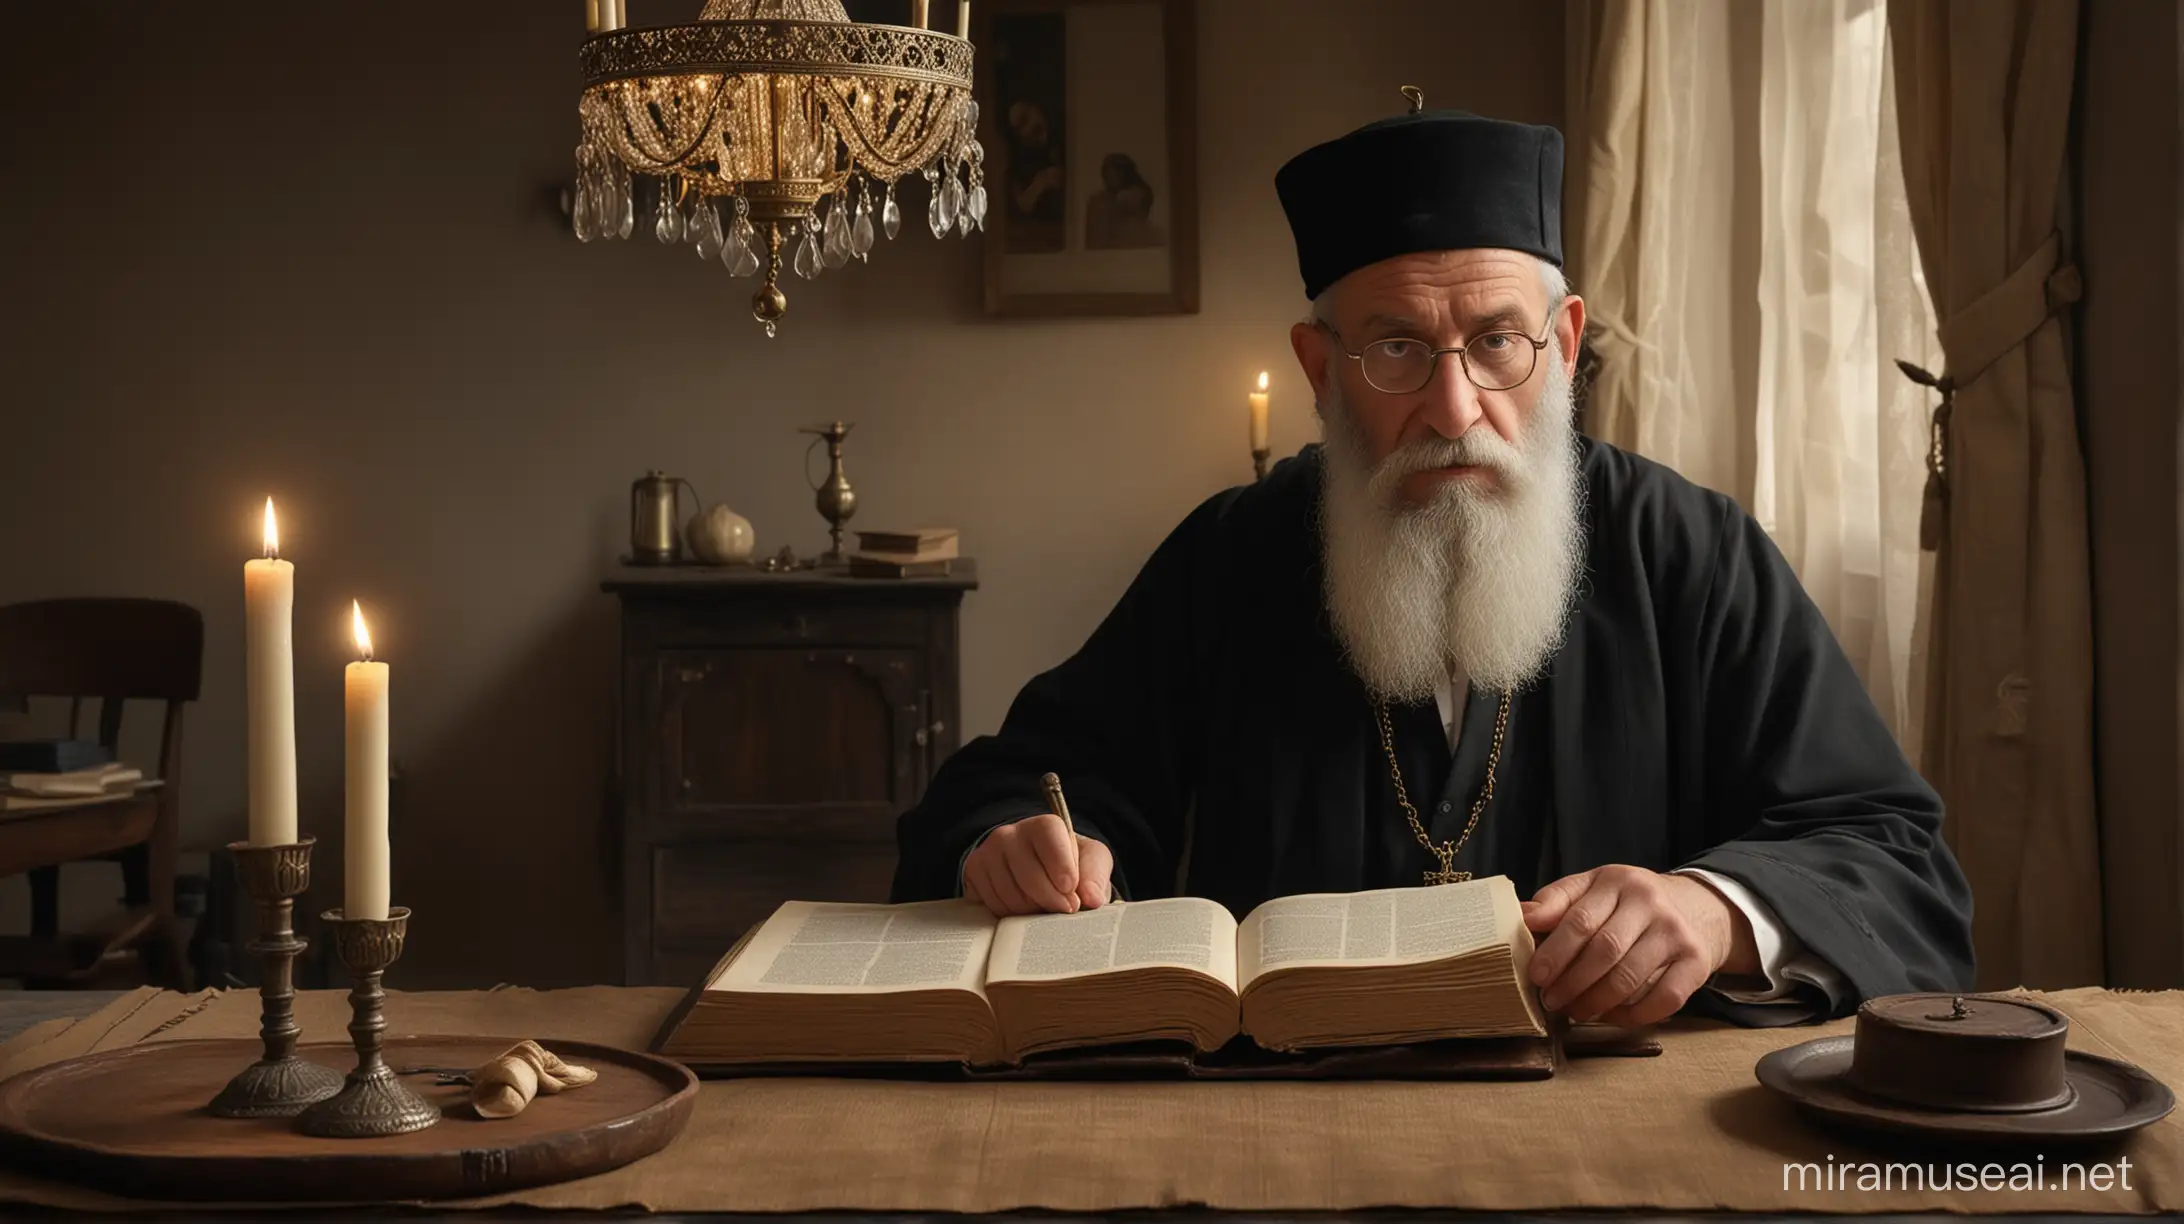 Traditional Jewish Rabbi Studying 12th Century Texts in Illuminated Room